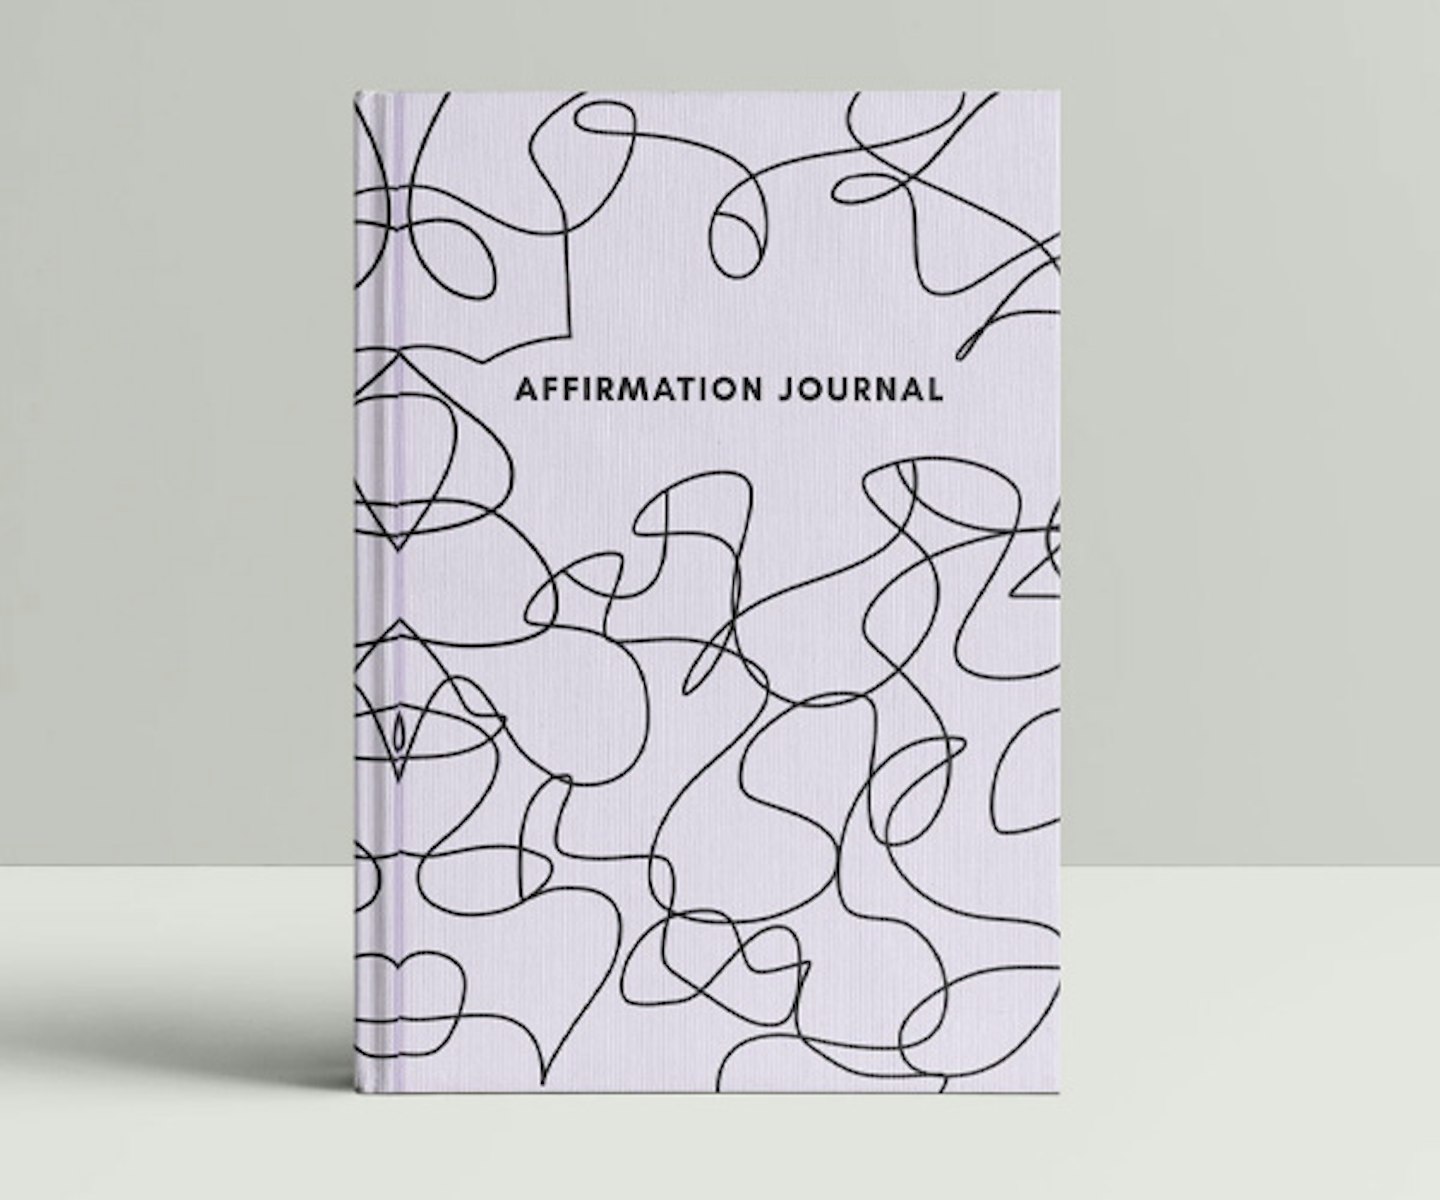 Affirmation Journal